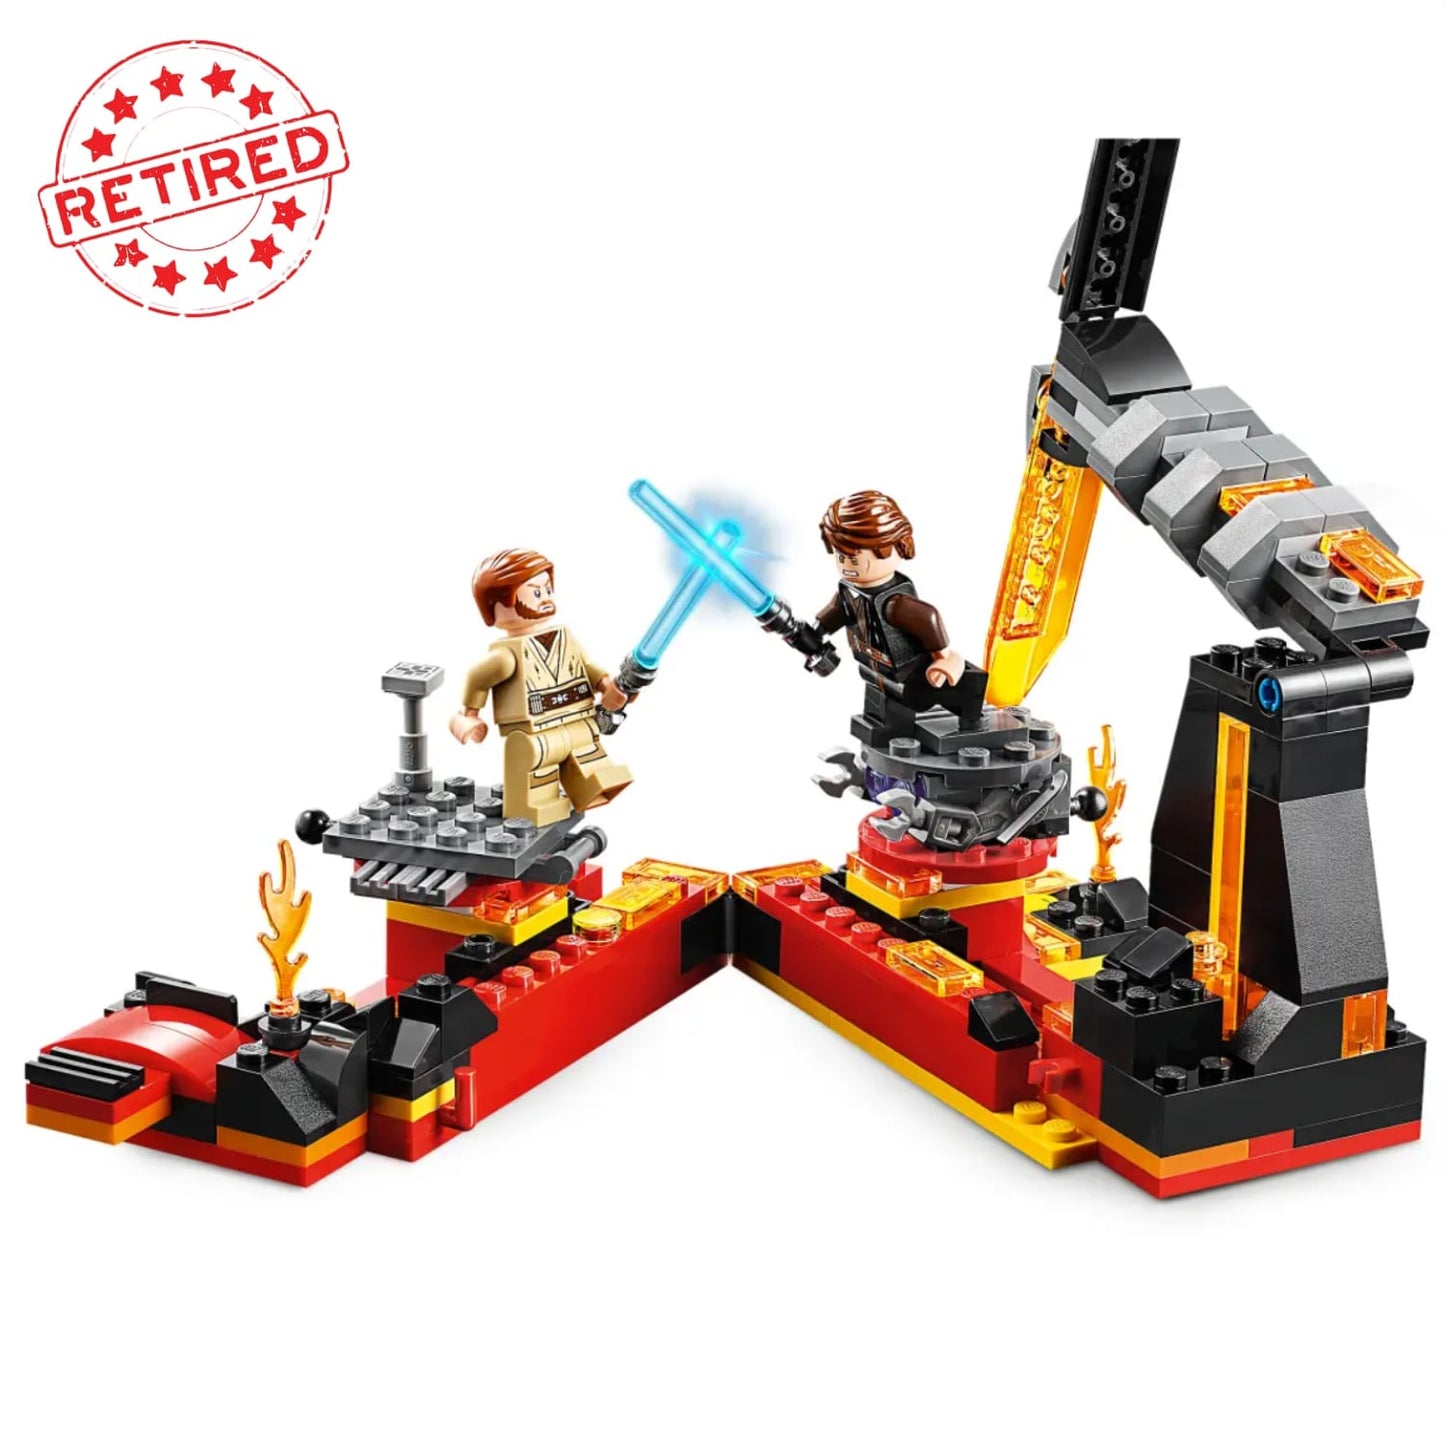 Lego 75269 Star Wars Duel on Mustafar